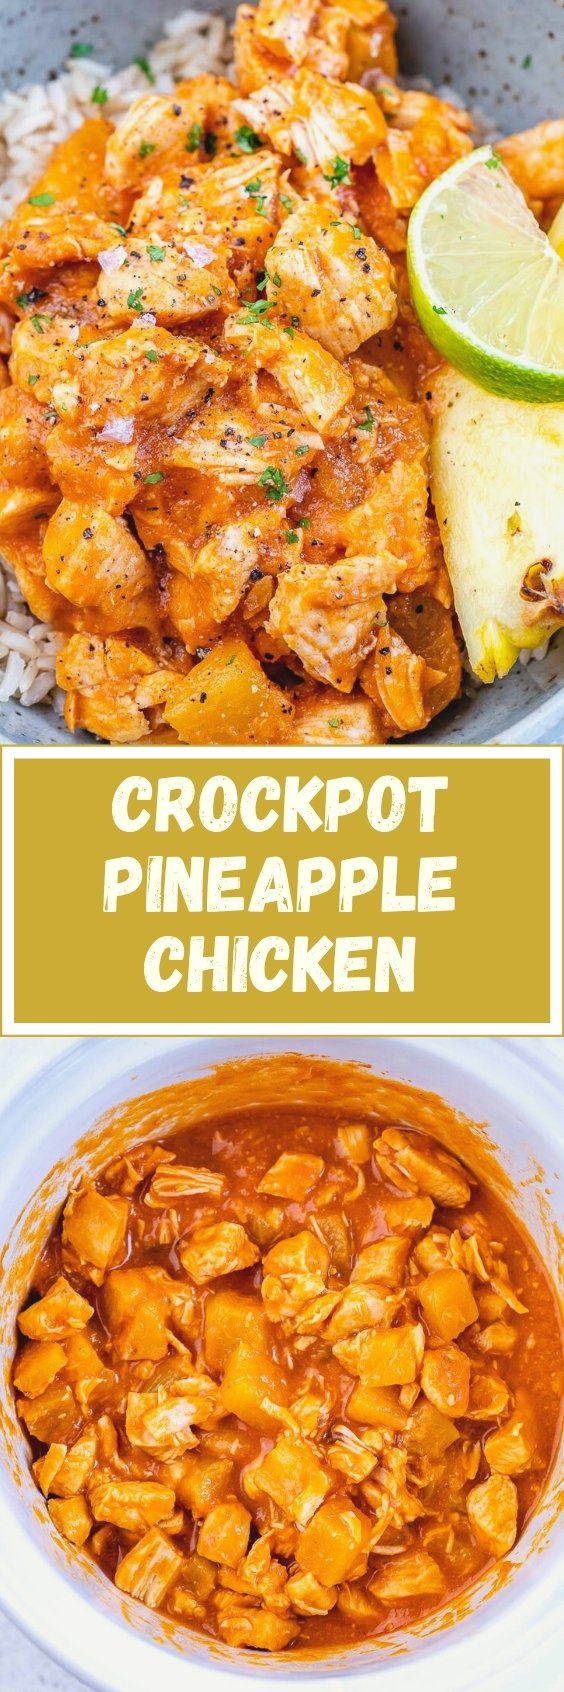 crockpot pineapple chicken